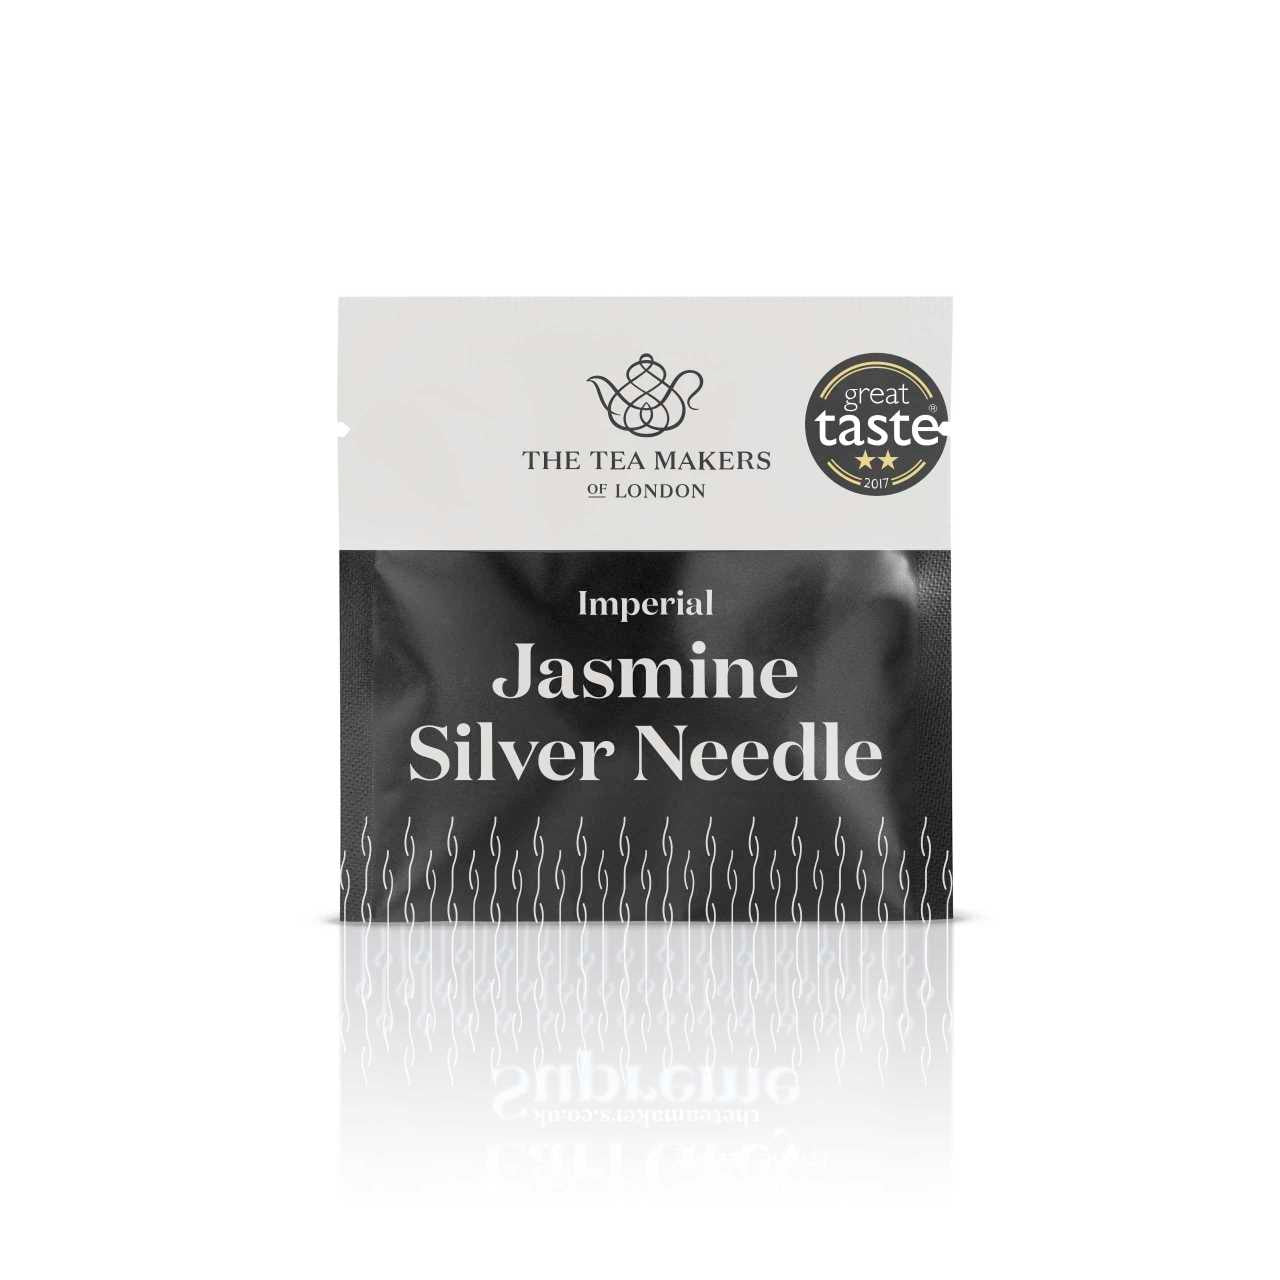 Jasmine Silver Needle Teabag Envelope